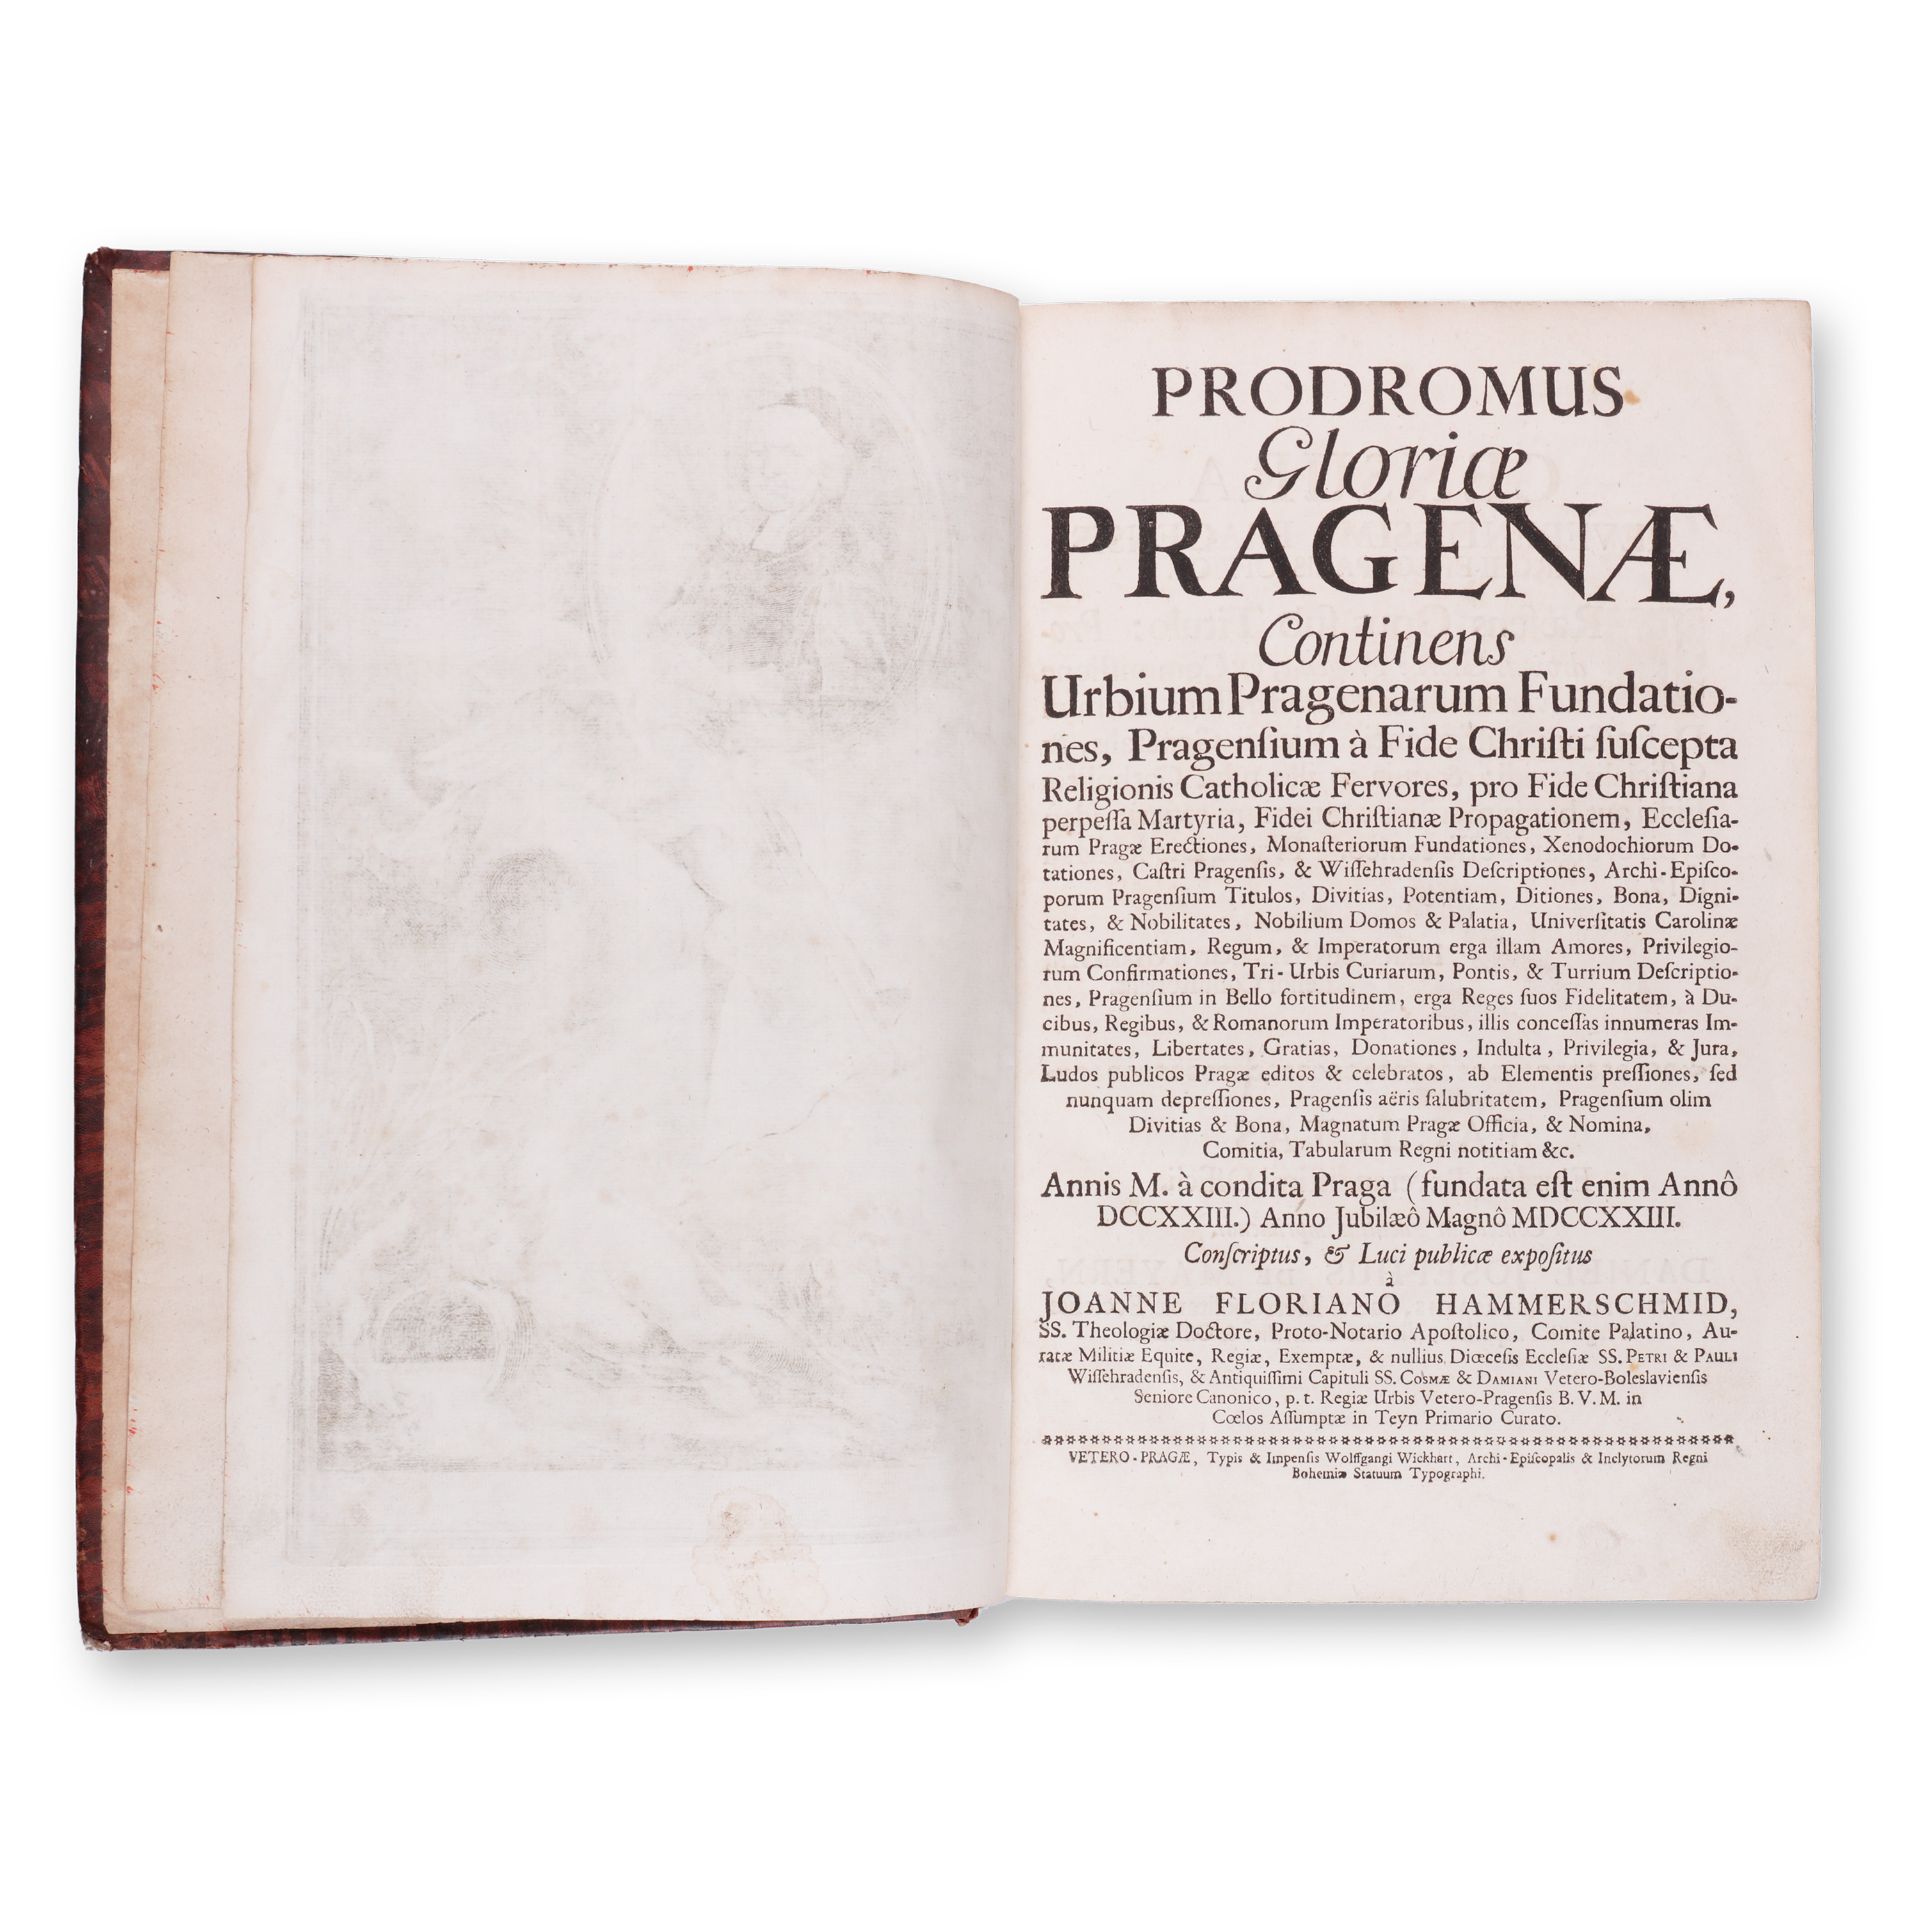 HAMMERSCHMID, Joanne Floriano (1652-1735): Prodromus gloriae Pragenae - Image 3 of 4